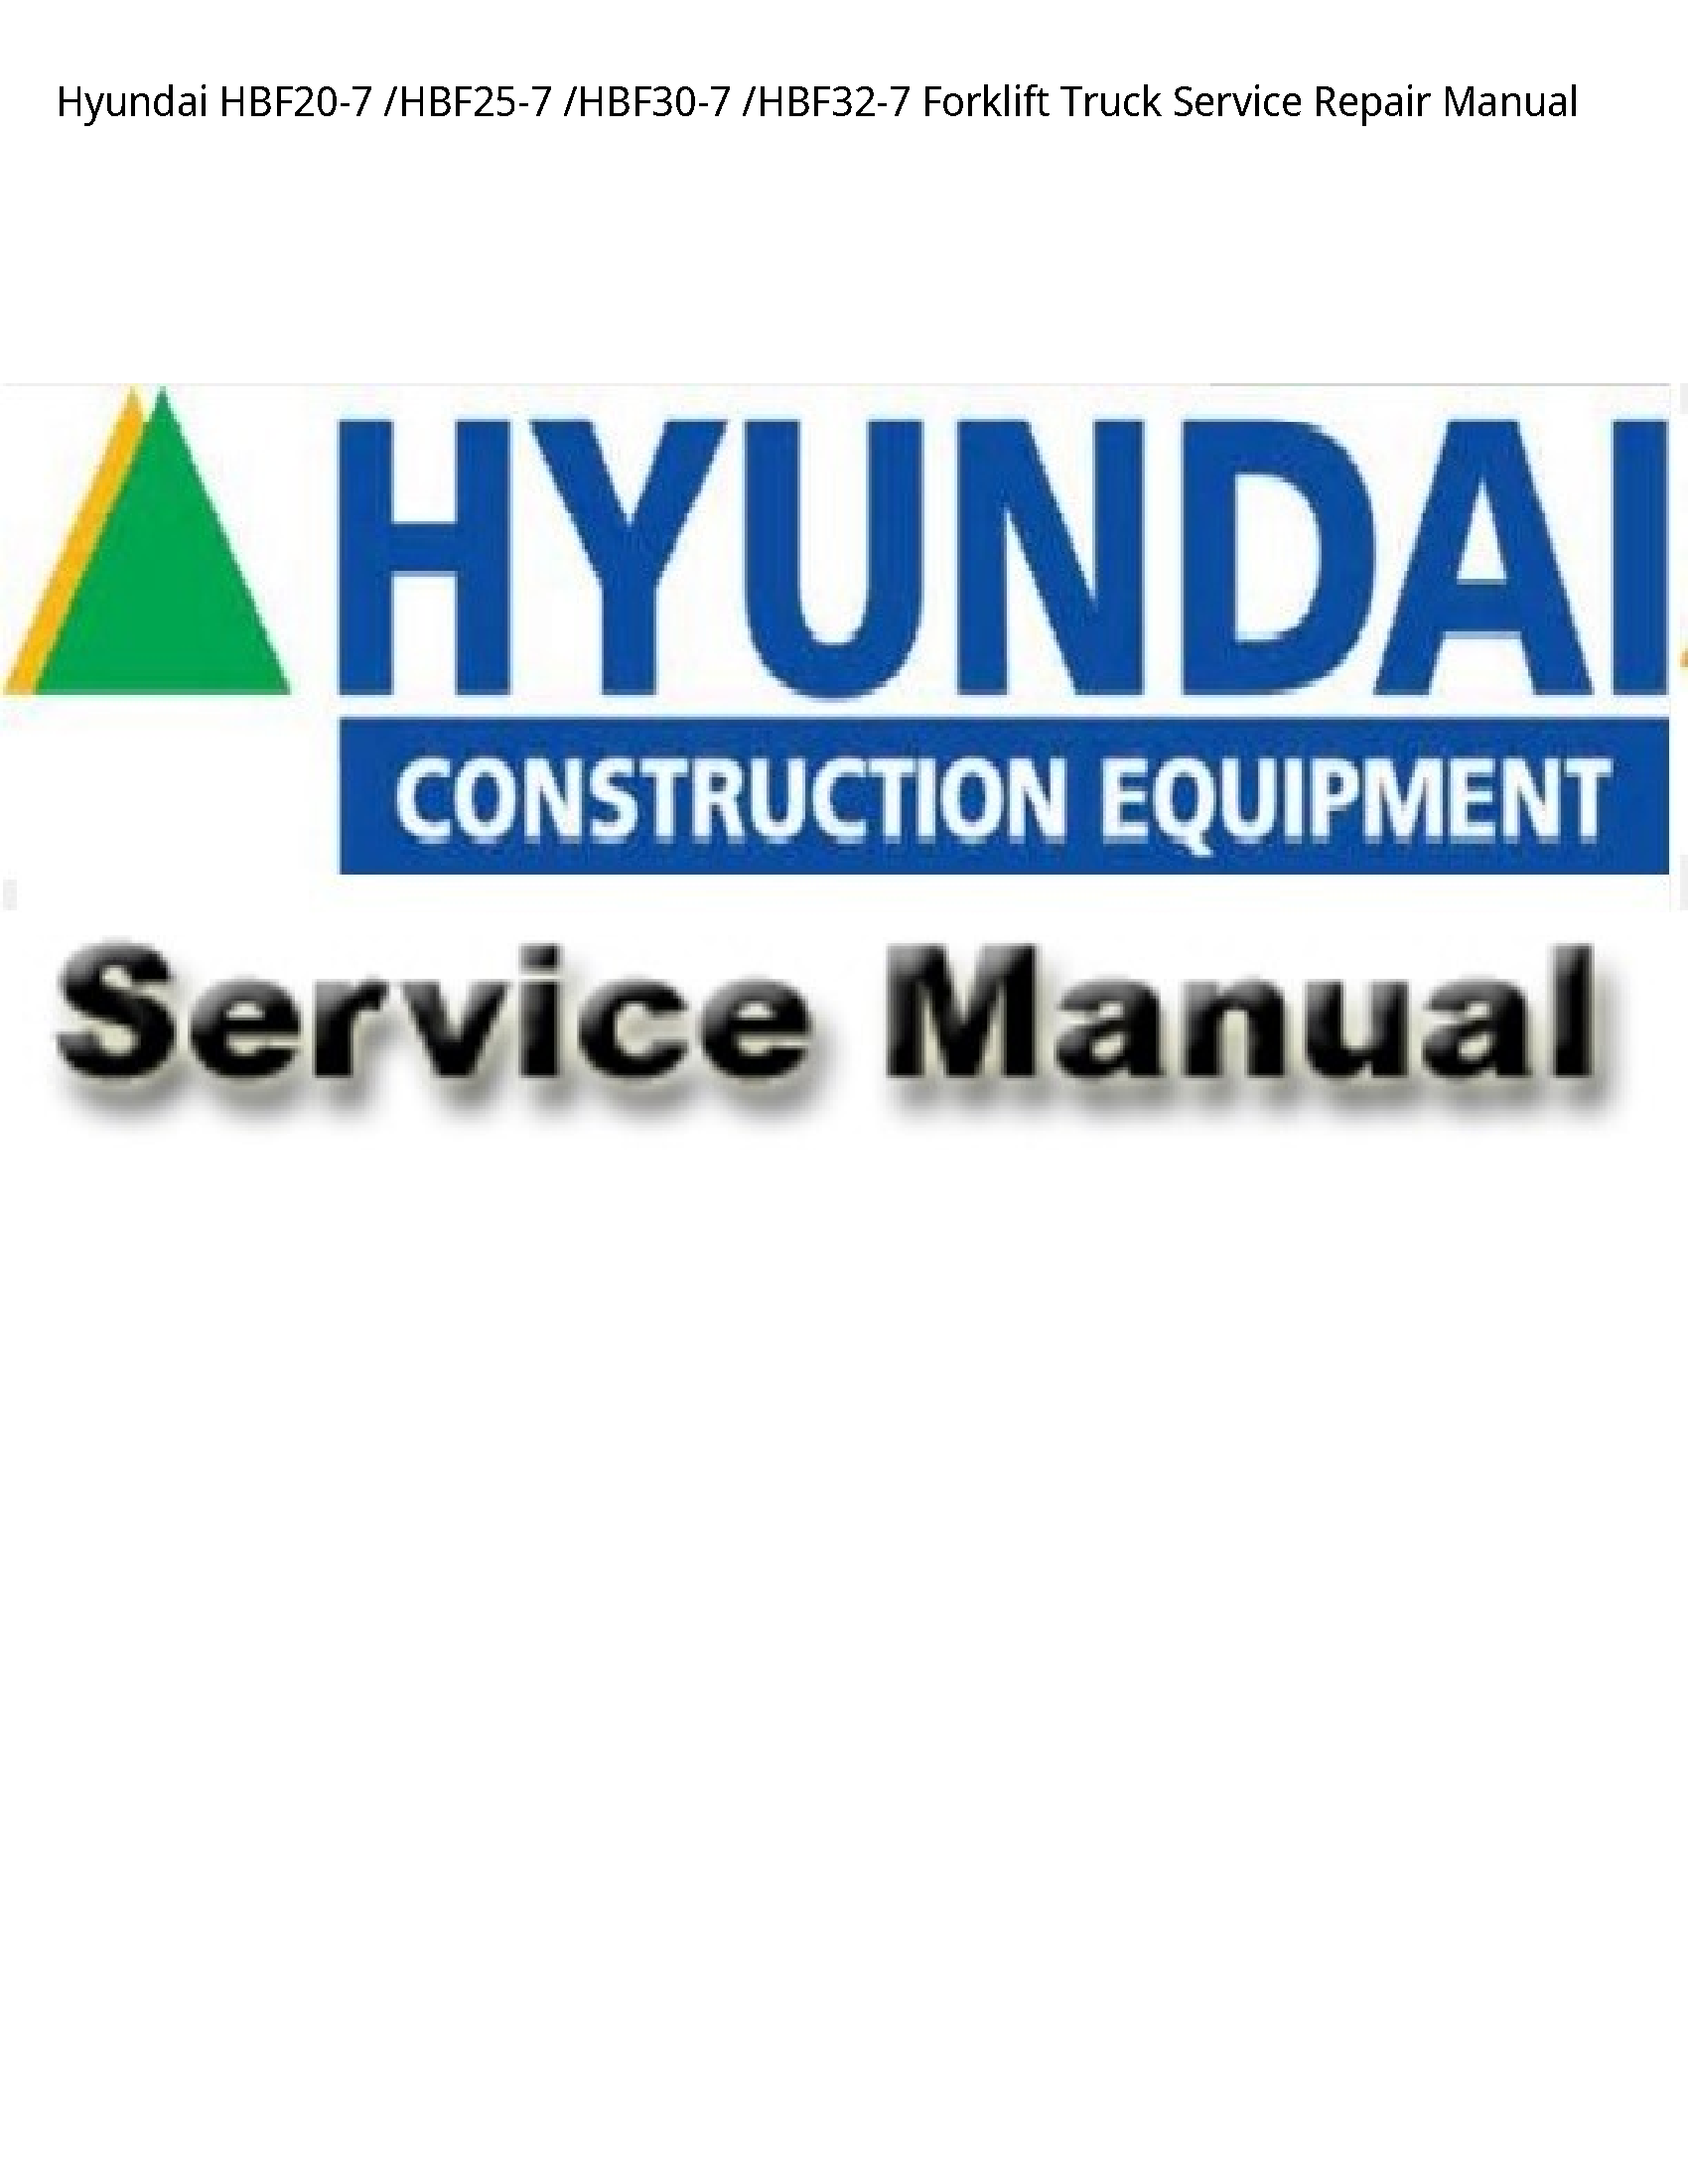 Hyundai HBF20-7 Forklift Truck manual